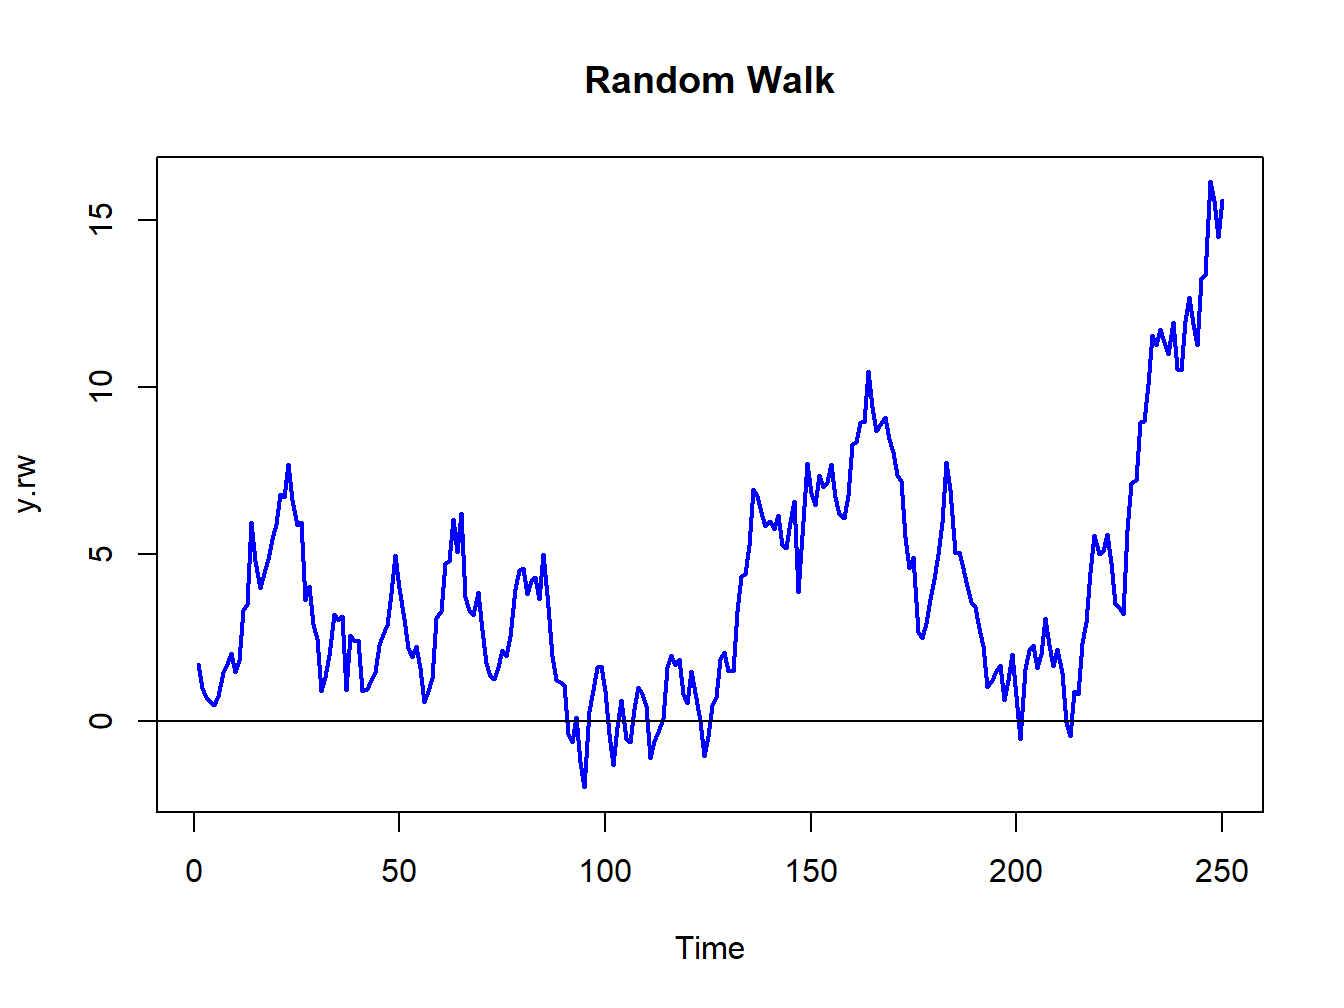 Random walk process: $Y_{t}=Y_{t-1}+\varepsilon_{t},\varepsilon_{t}\sim\mathrm{GWN}(0,1)$.